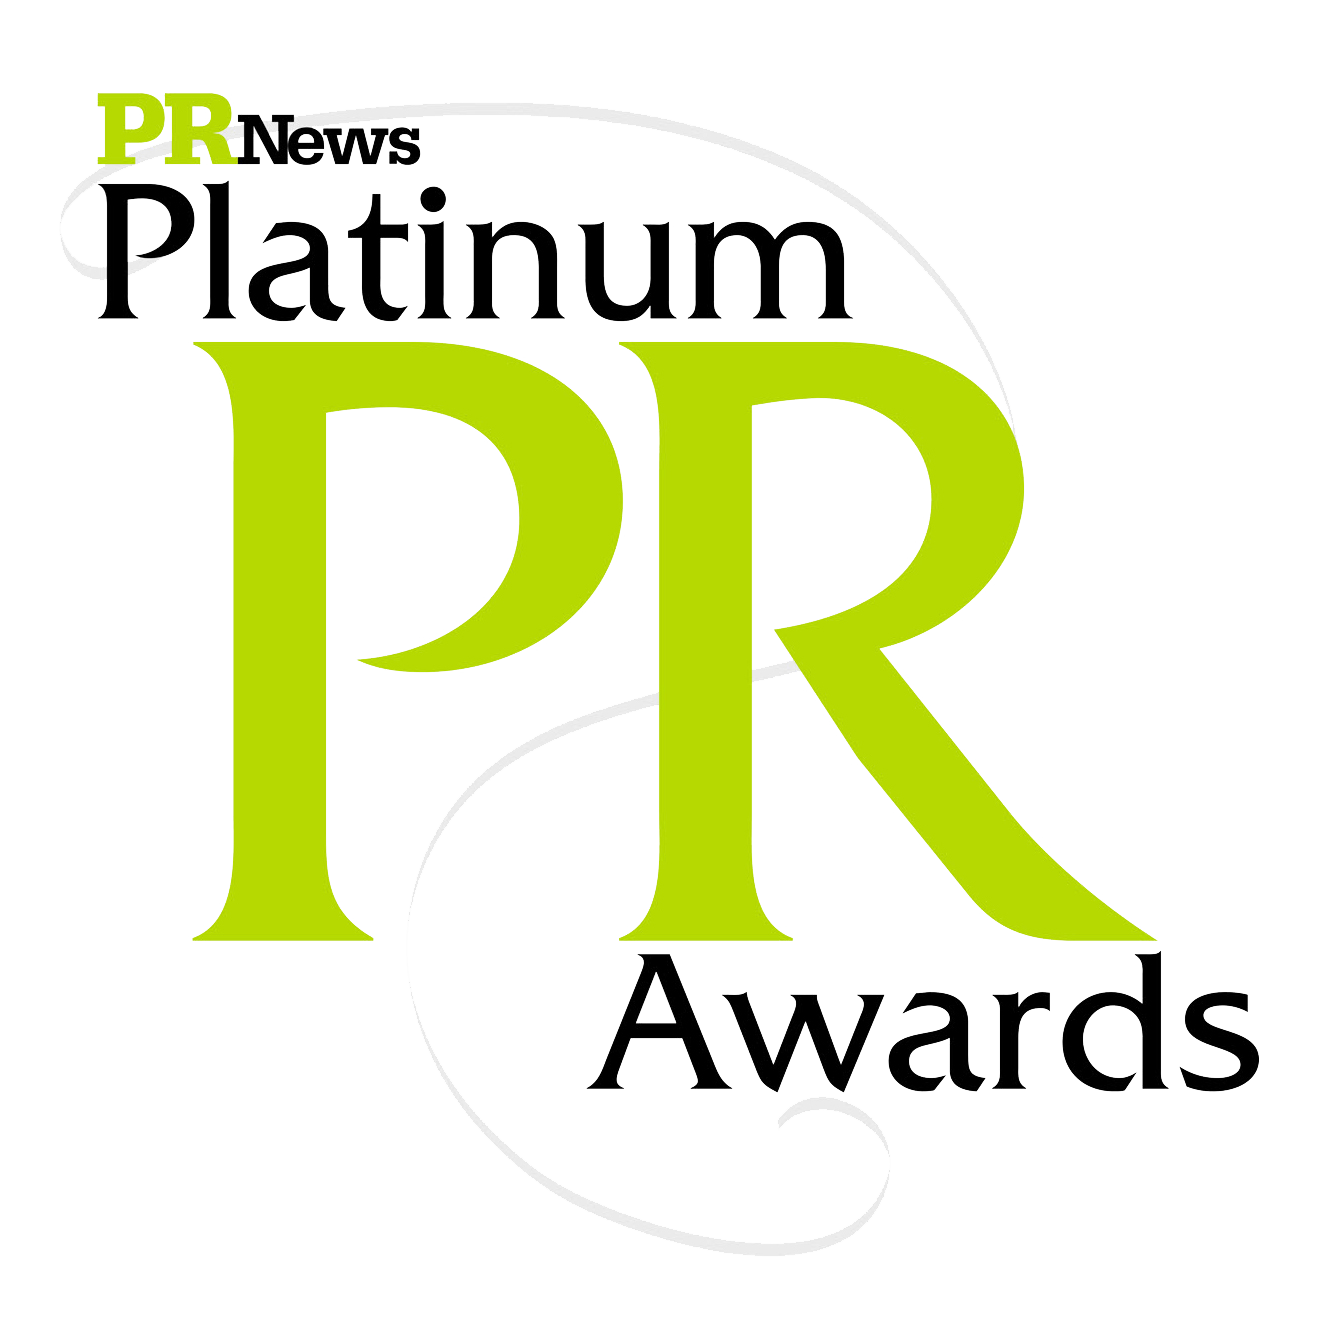 (PR News) Platinum PR Awards